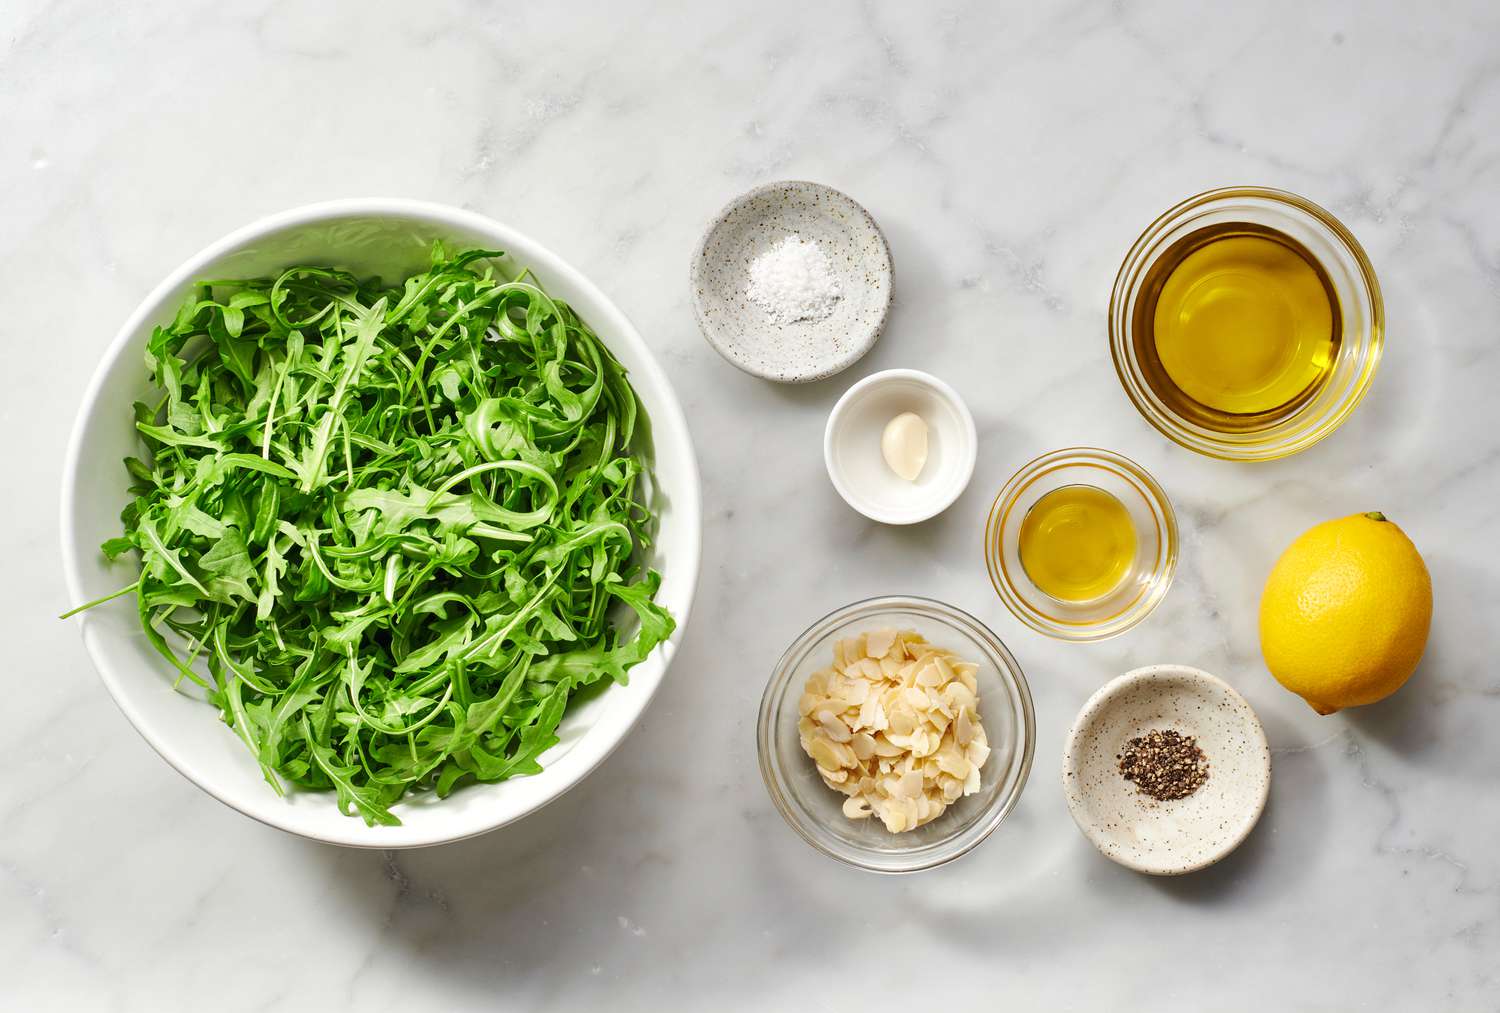 ingredients gathered for arugula salad with whole lemon dressing